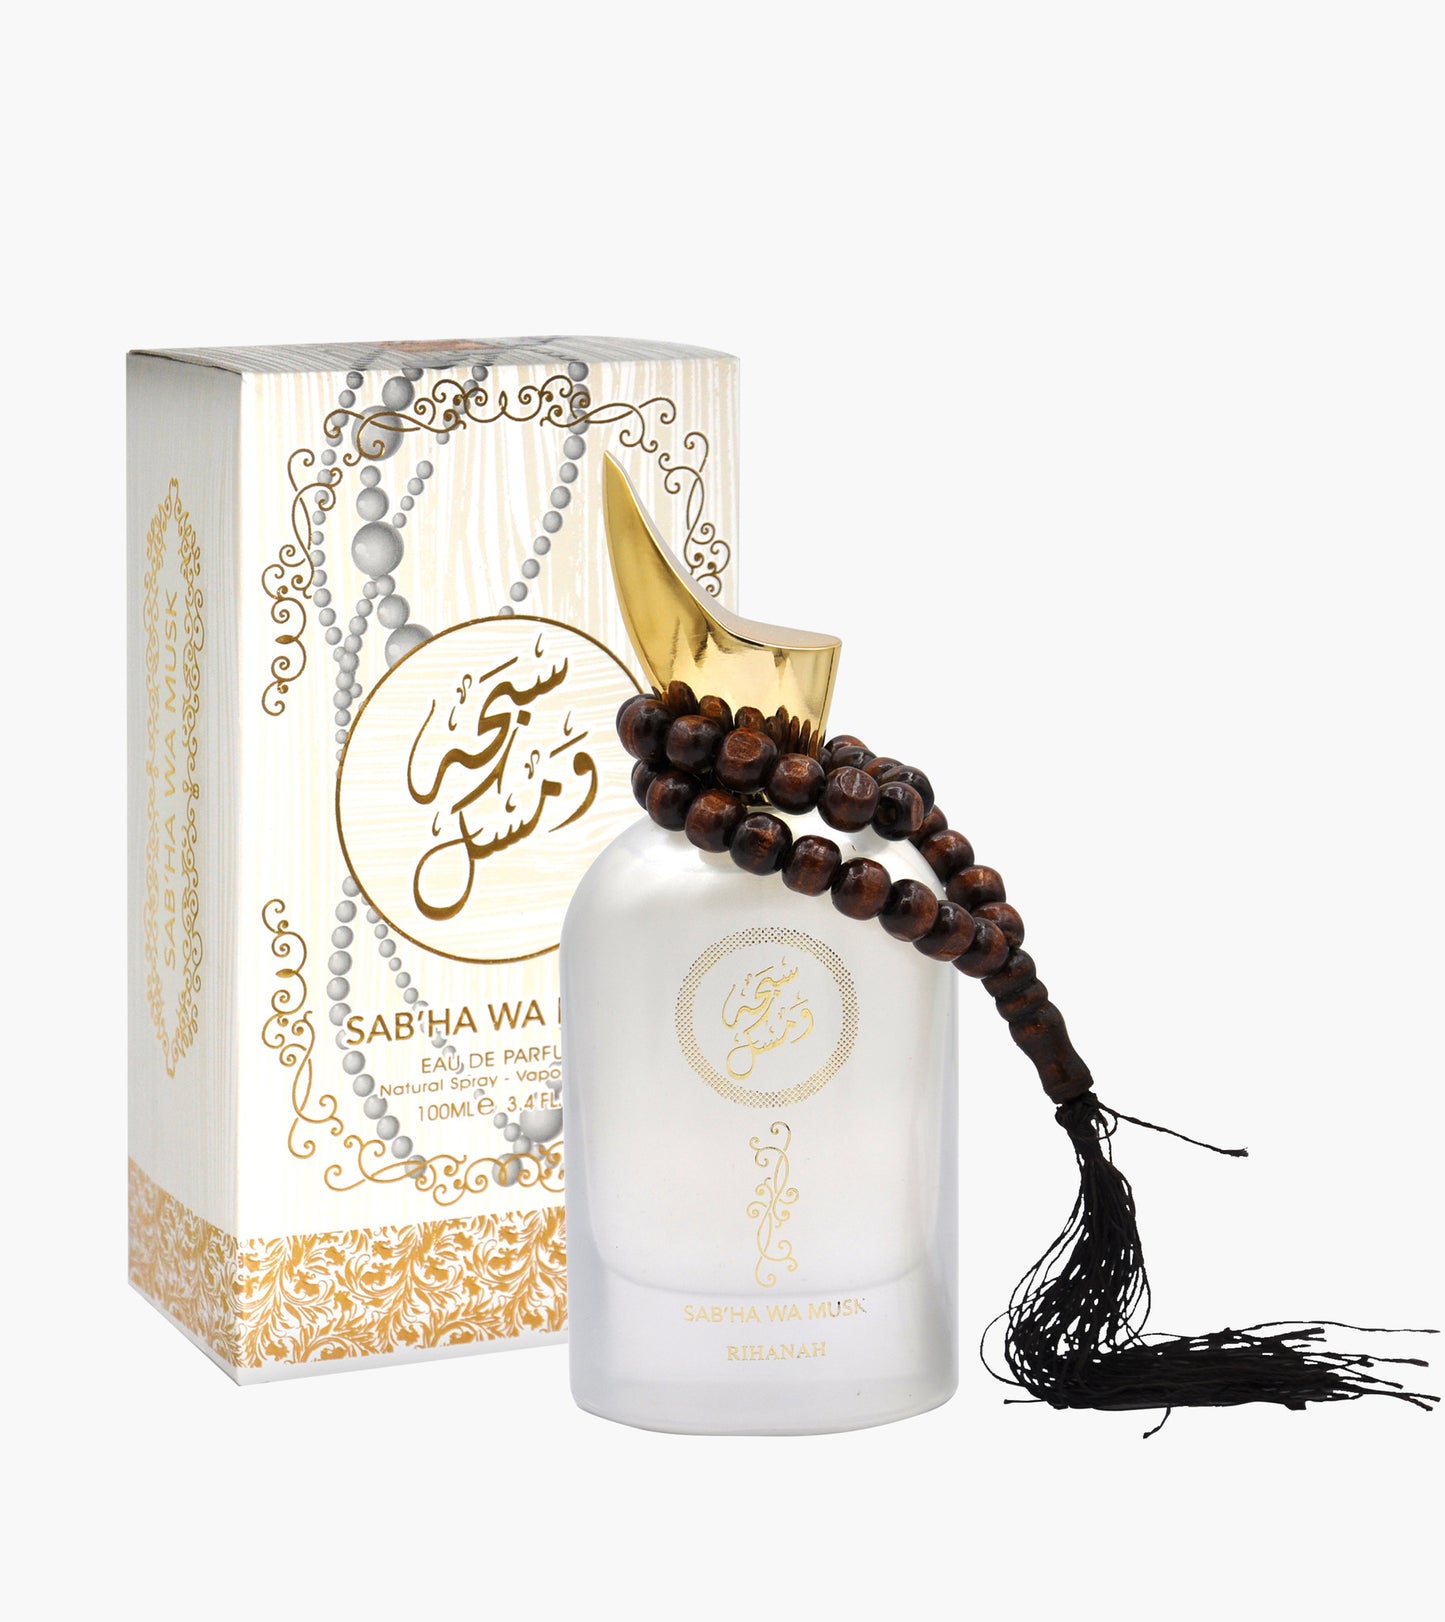 Sab'ha wa Musk- 100ML - eau de parfum - Rihanah - De Parfumist.nl - Online Parfumerie